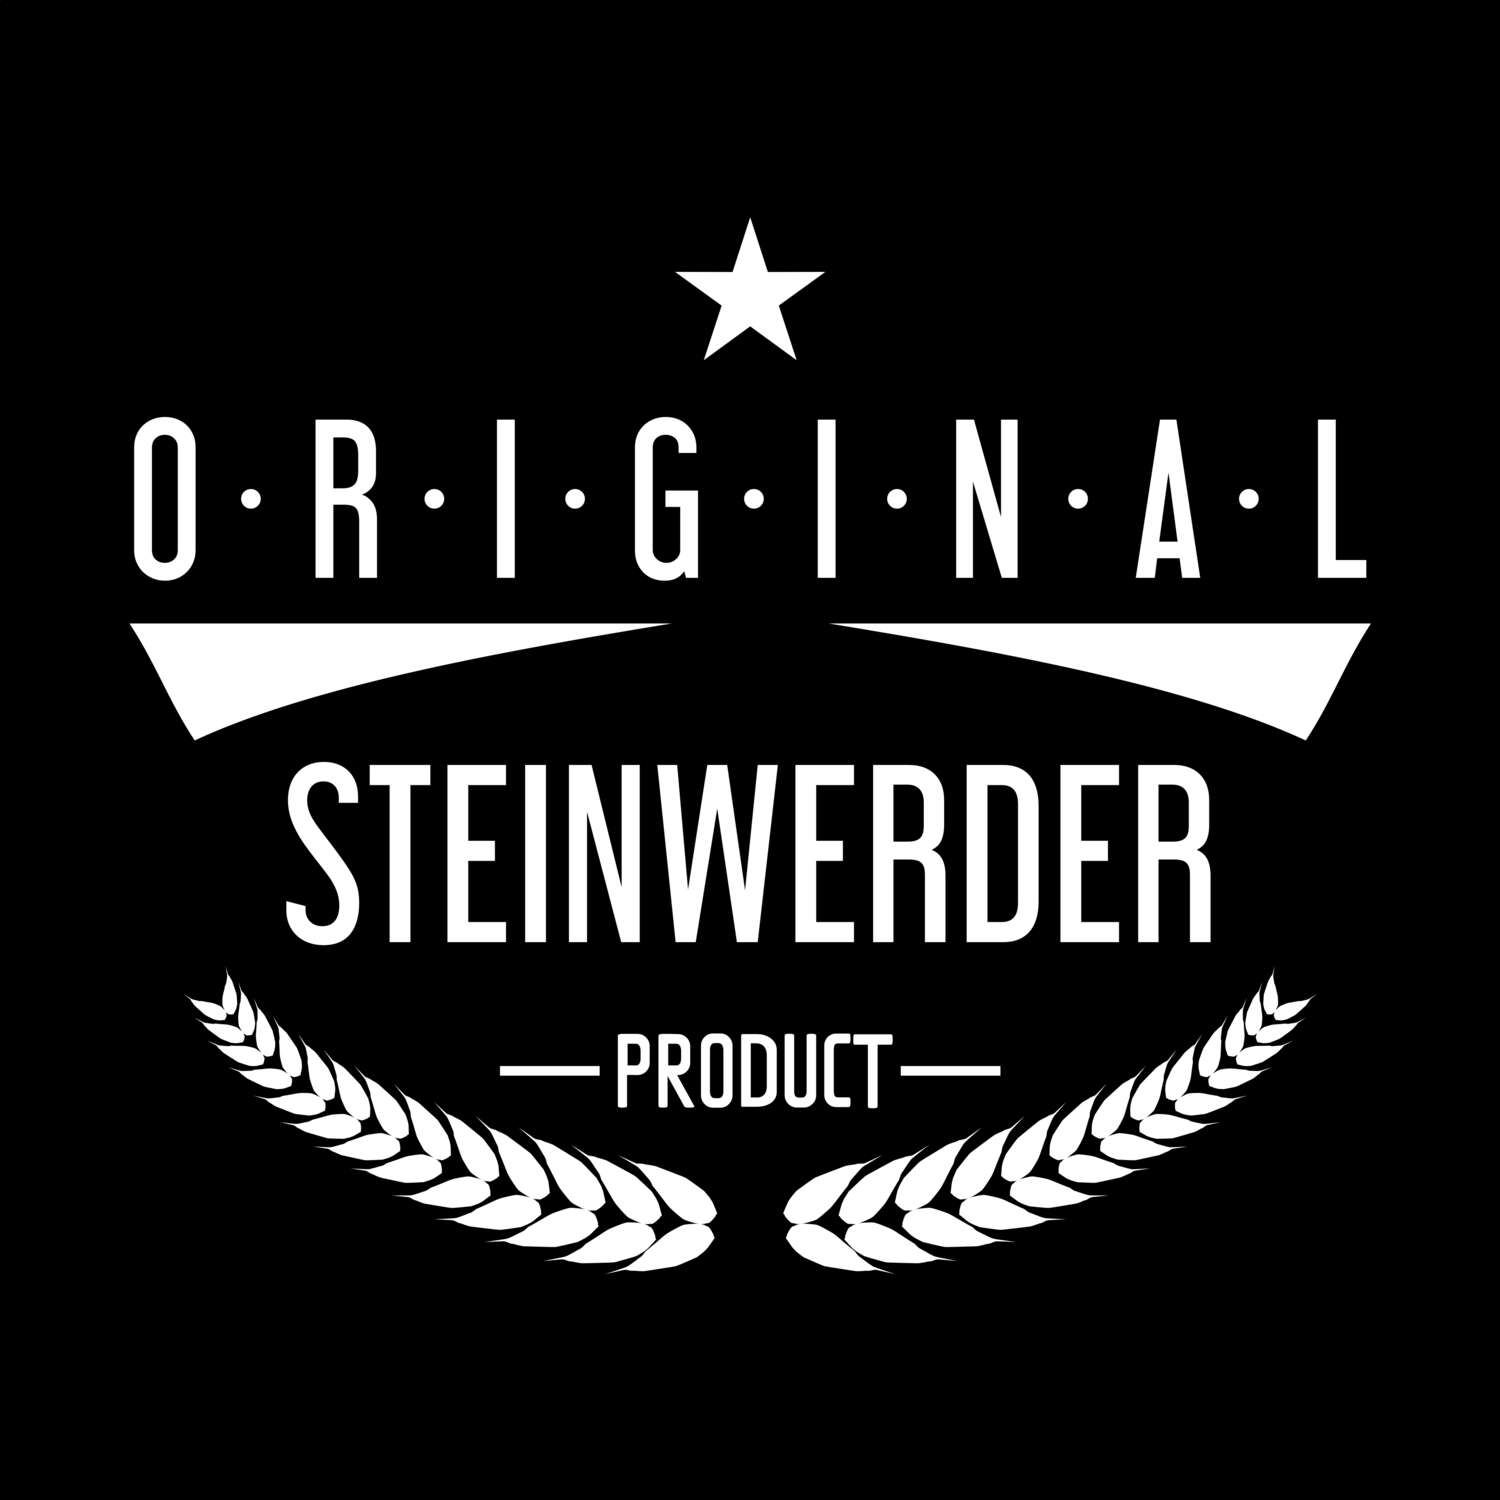 Steinwerder T-Shirt »Original Product«